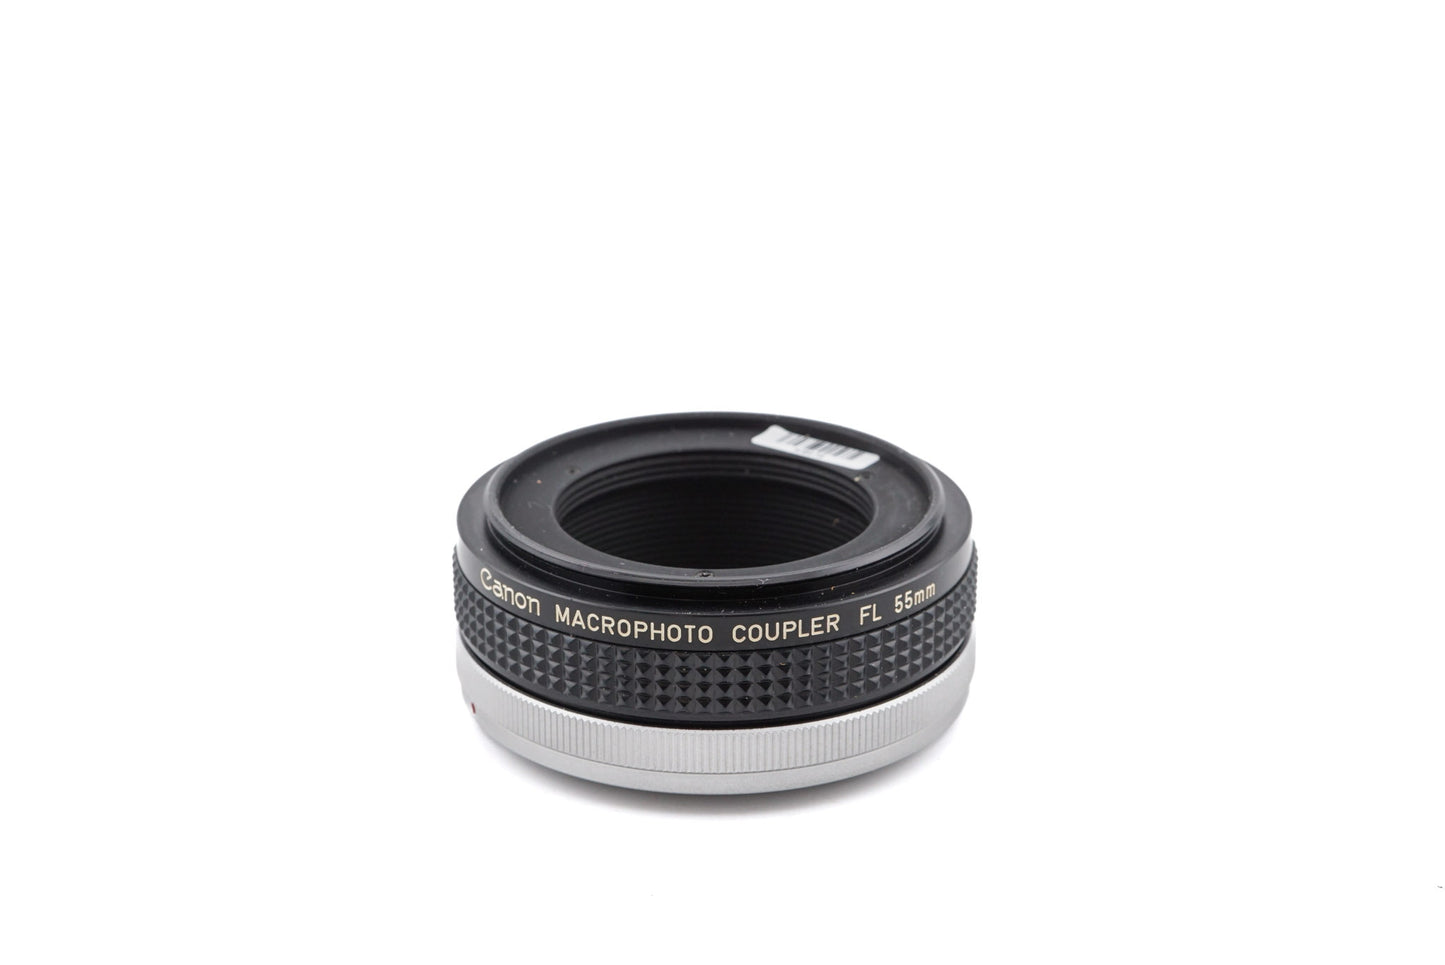 Canon Macrophoto Coupler FL 55mm - Accessory